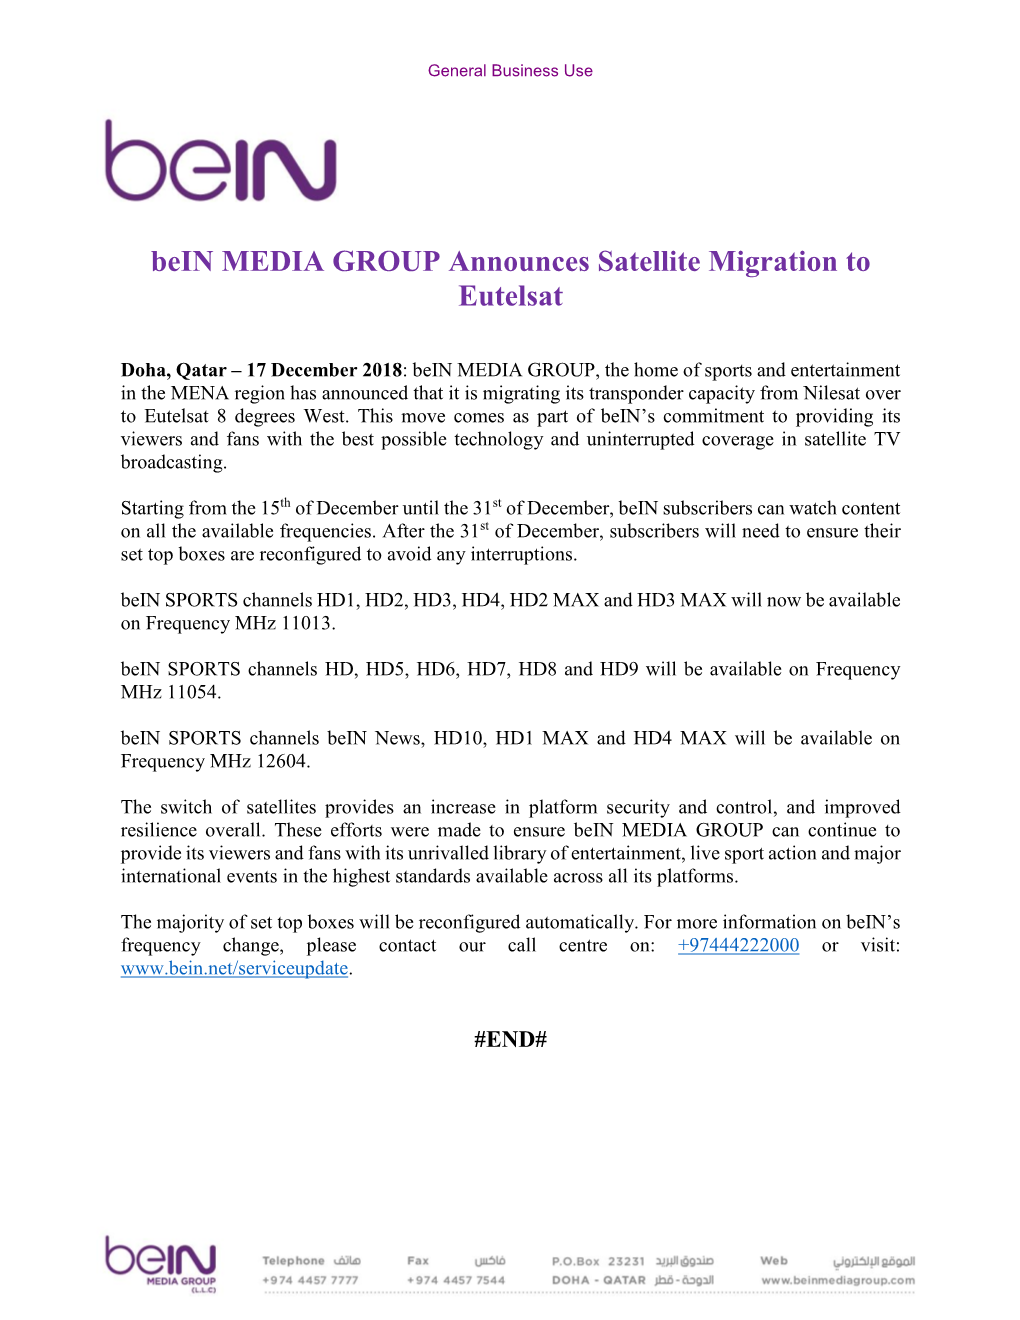 Bein MEDIA GROUP Announces Satellite Migration to Eutelsat